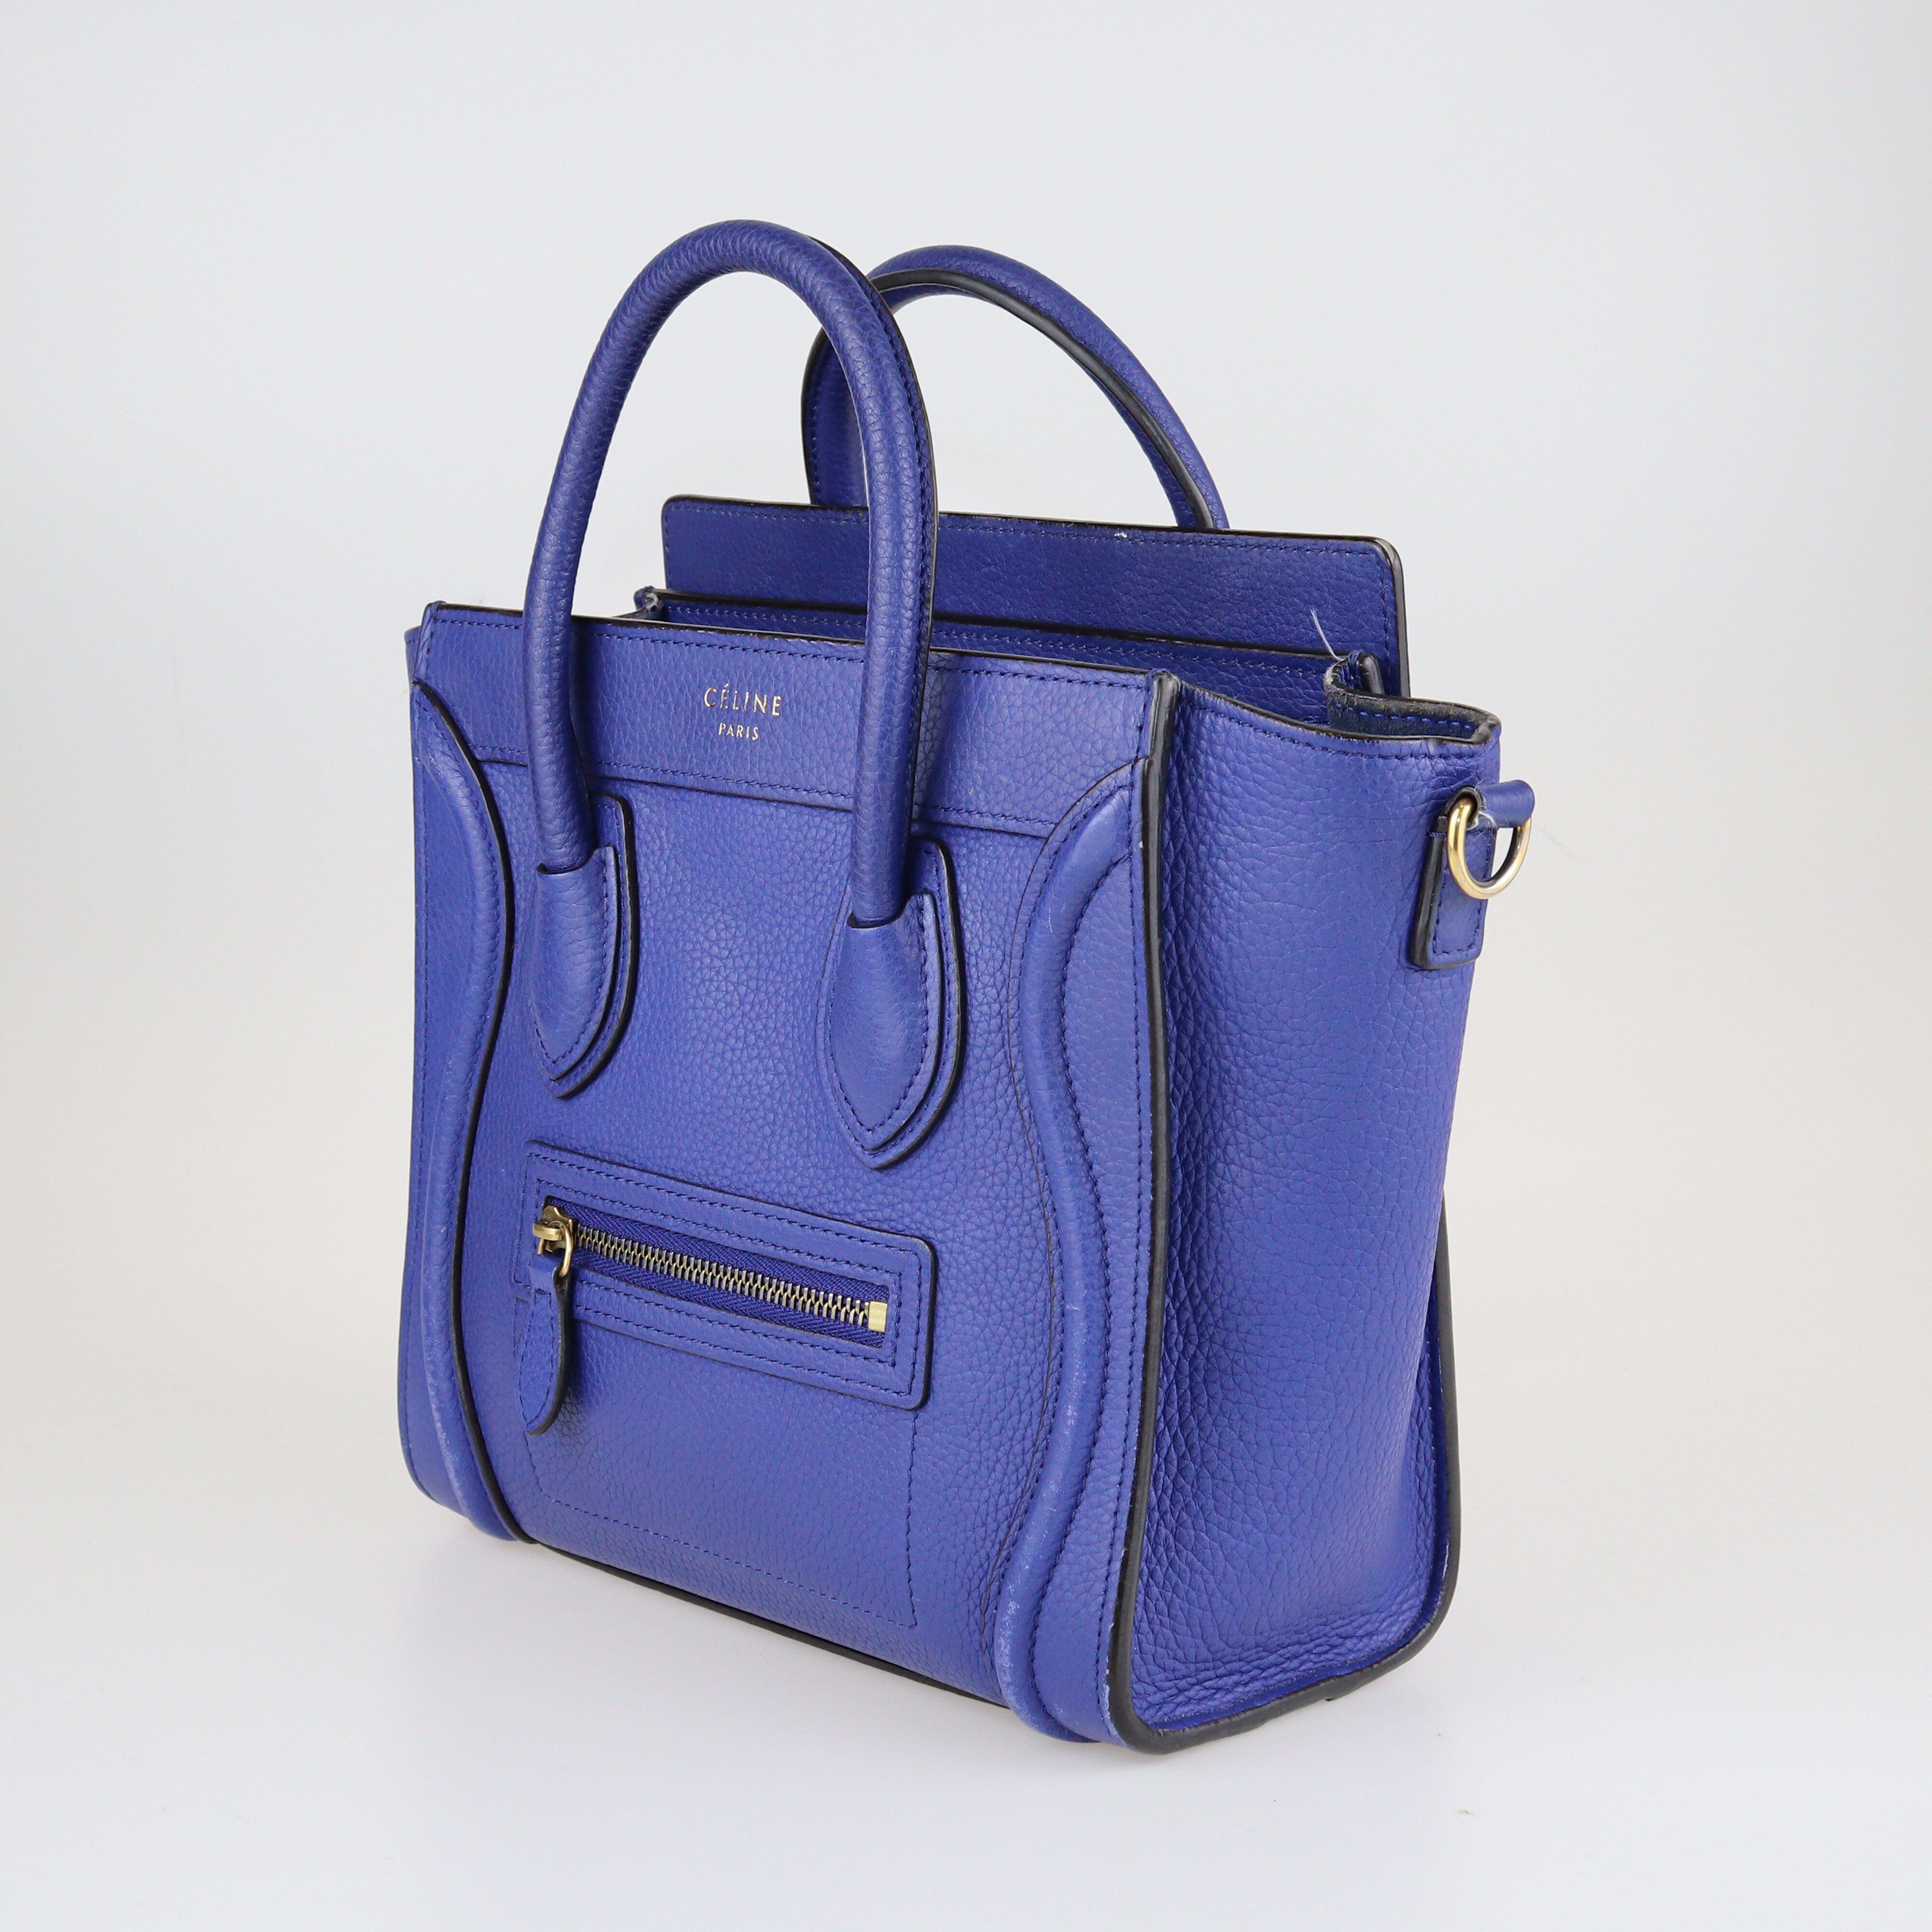 Blue Nano Luggage Tote Bag Bags Celine 